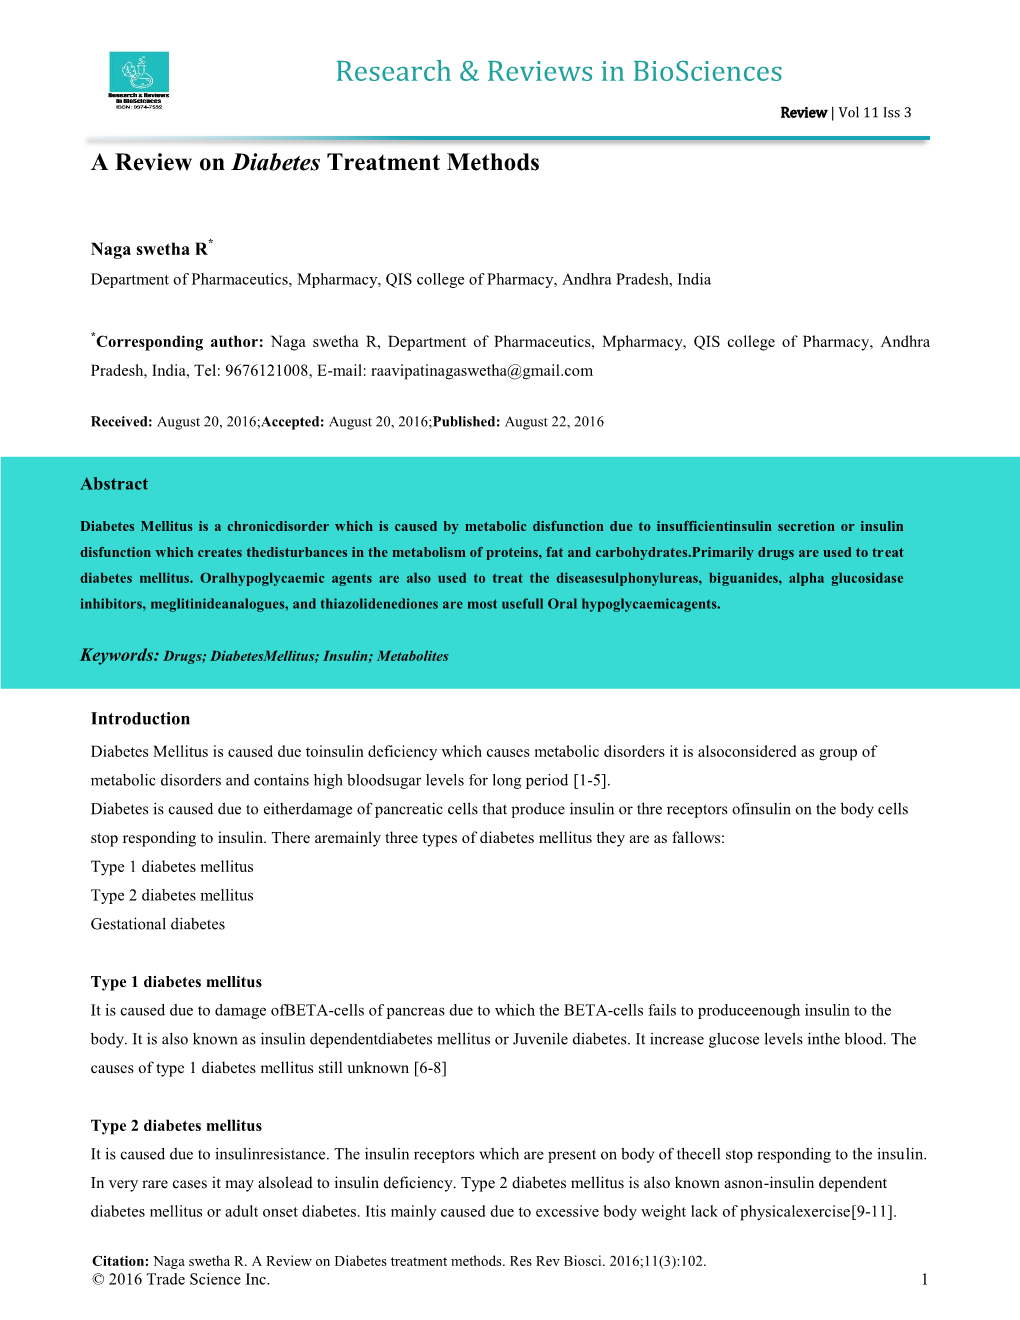 A Review on Diabetes Treatment Methods